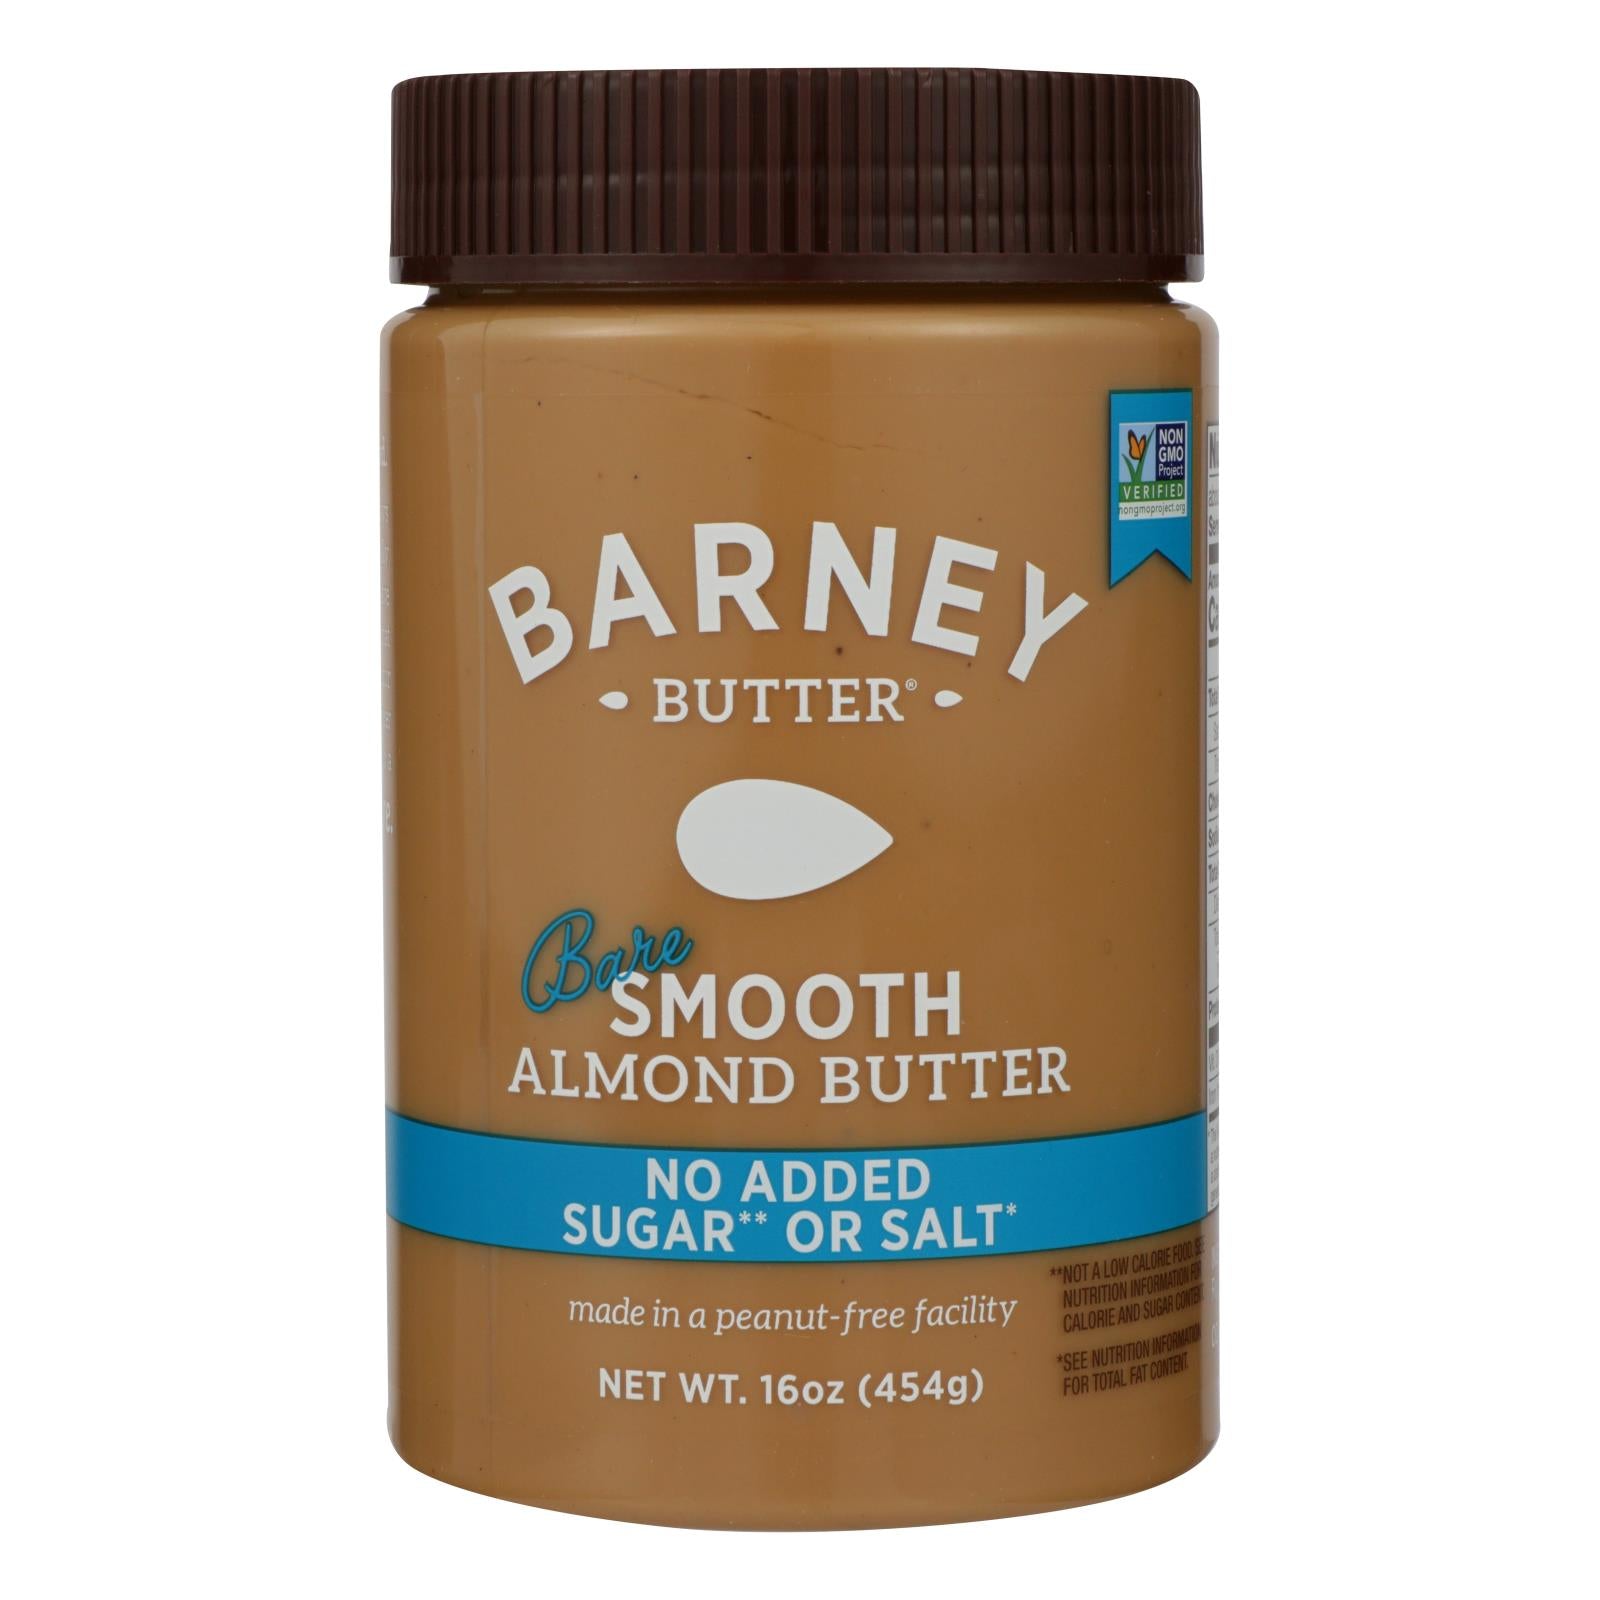 Barney Butter, Barney Butter - Almond Butter - Bare Smooth - Case of 6 - 16 oz. (Pack of 6)